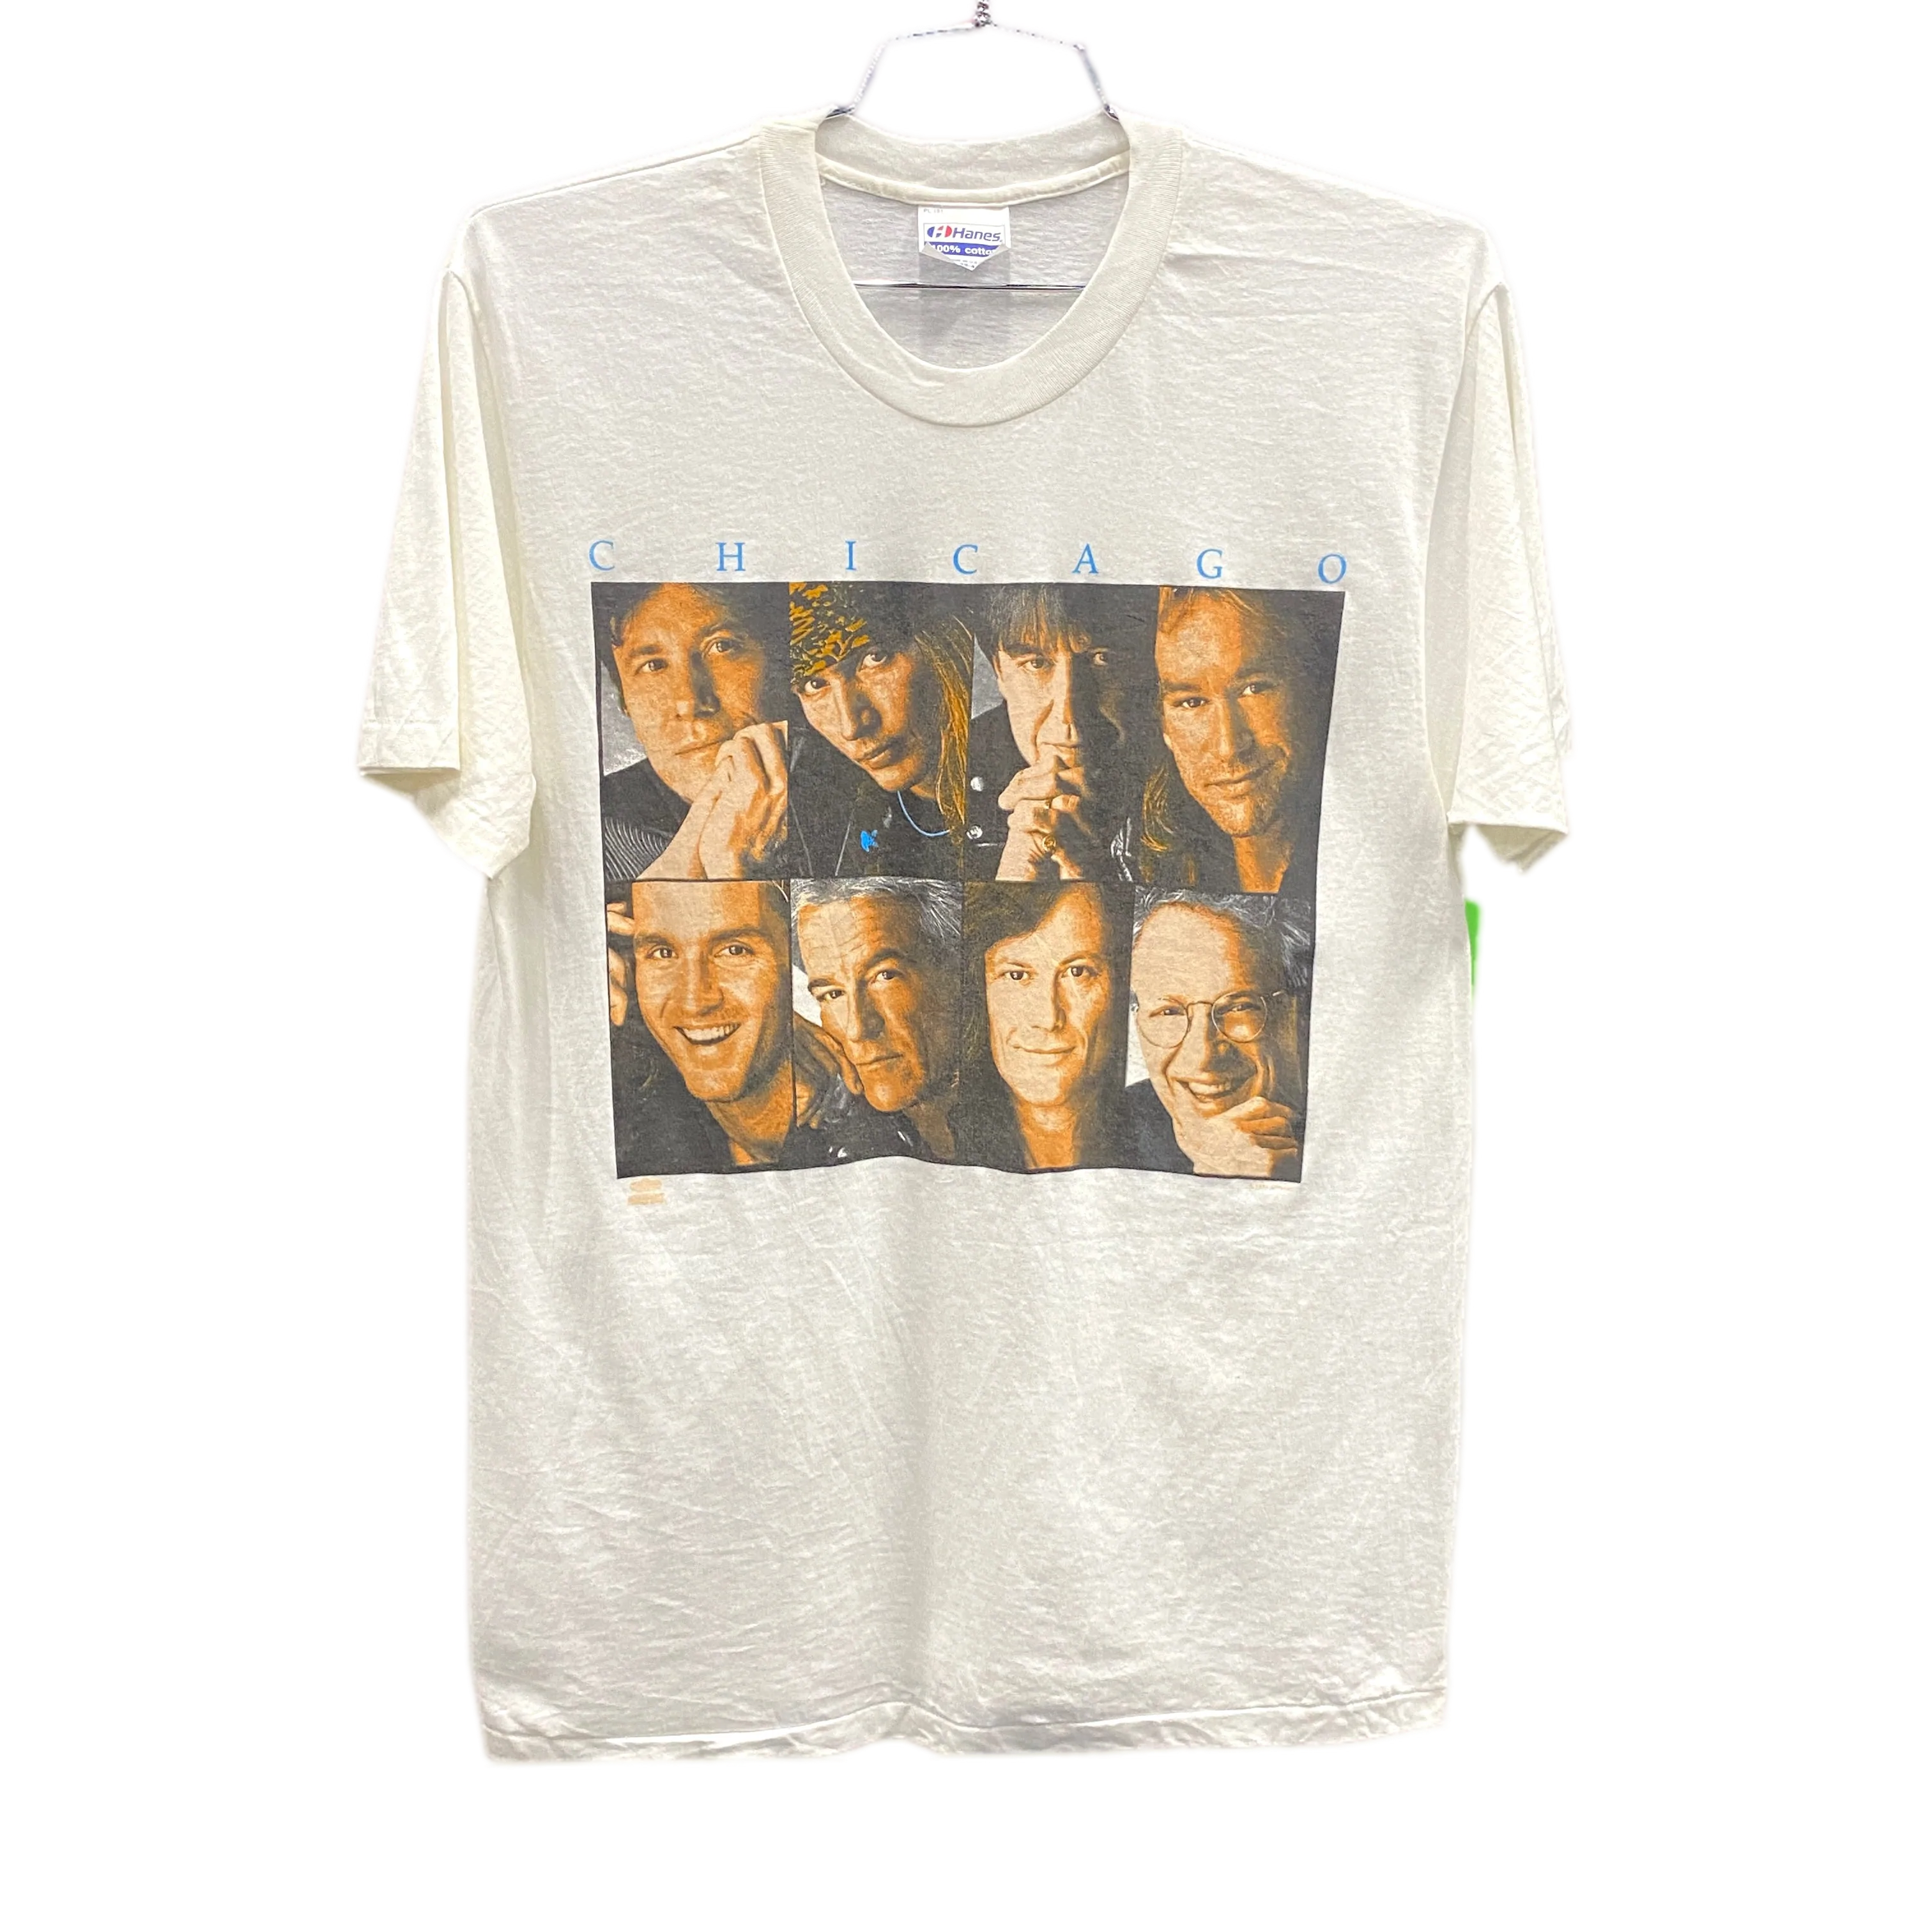 82 Chicago Band White Music T-Shirt sz L – Vintage Grails